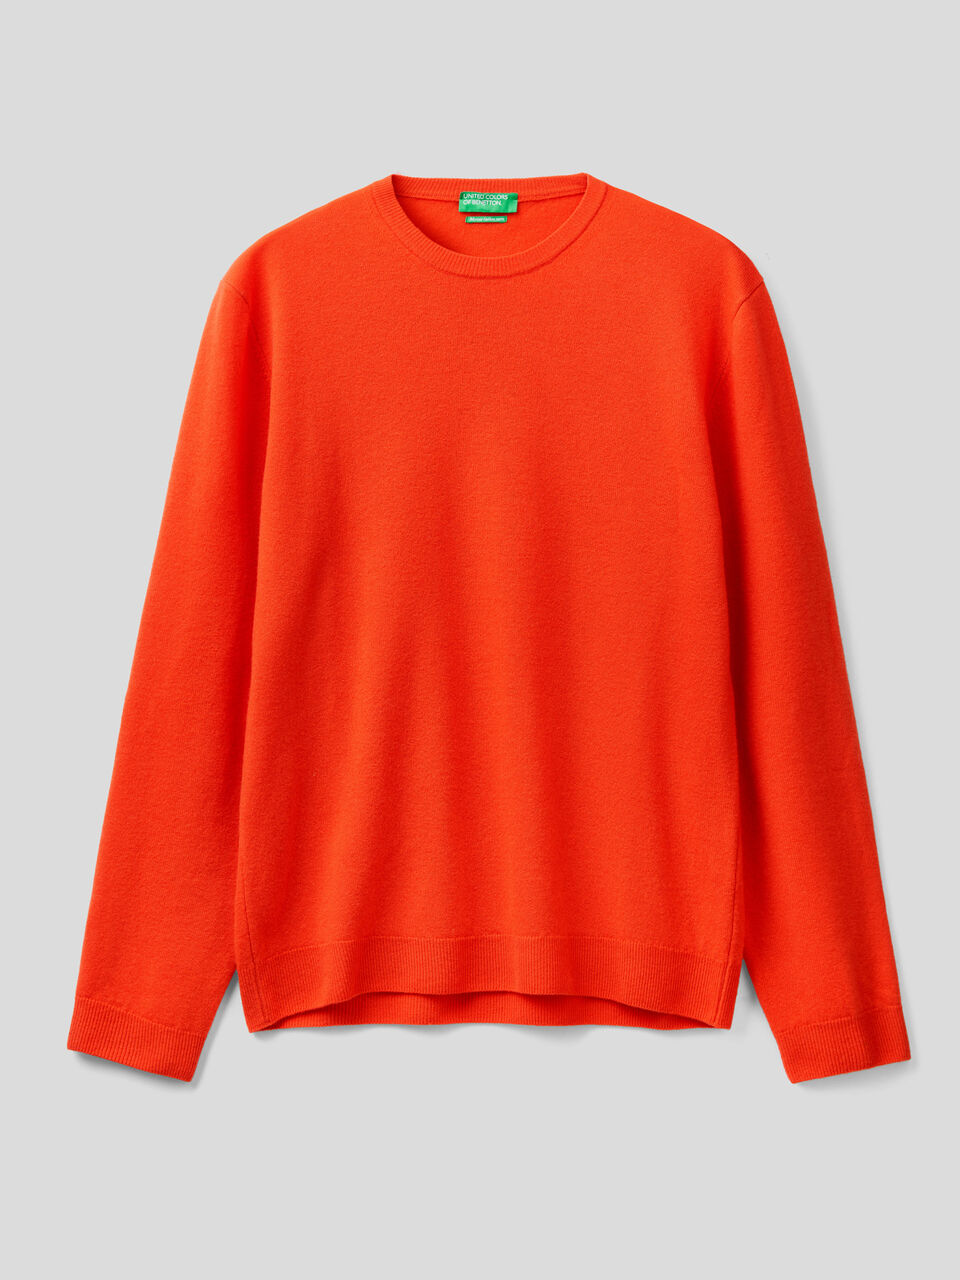 Crew Neck Sweater in Tiger Burnt Orange — C.D. Rigden & Son